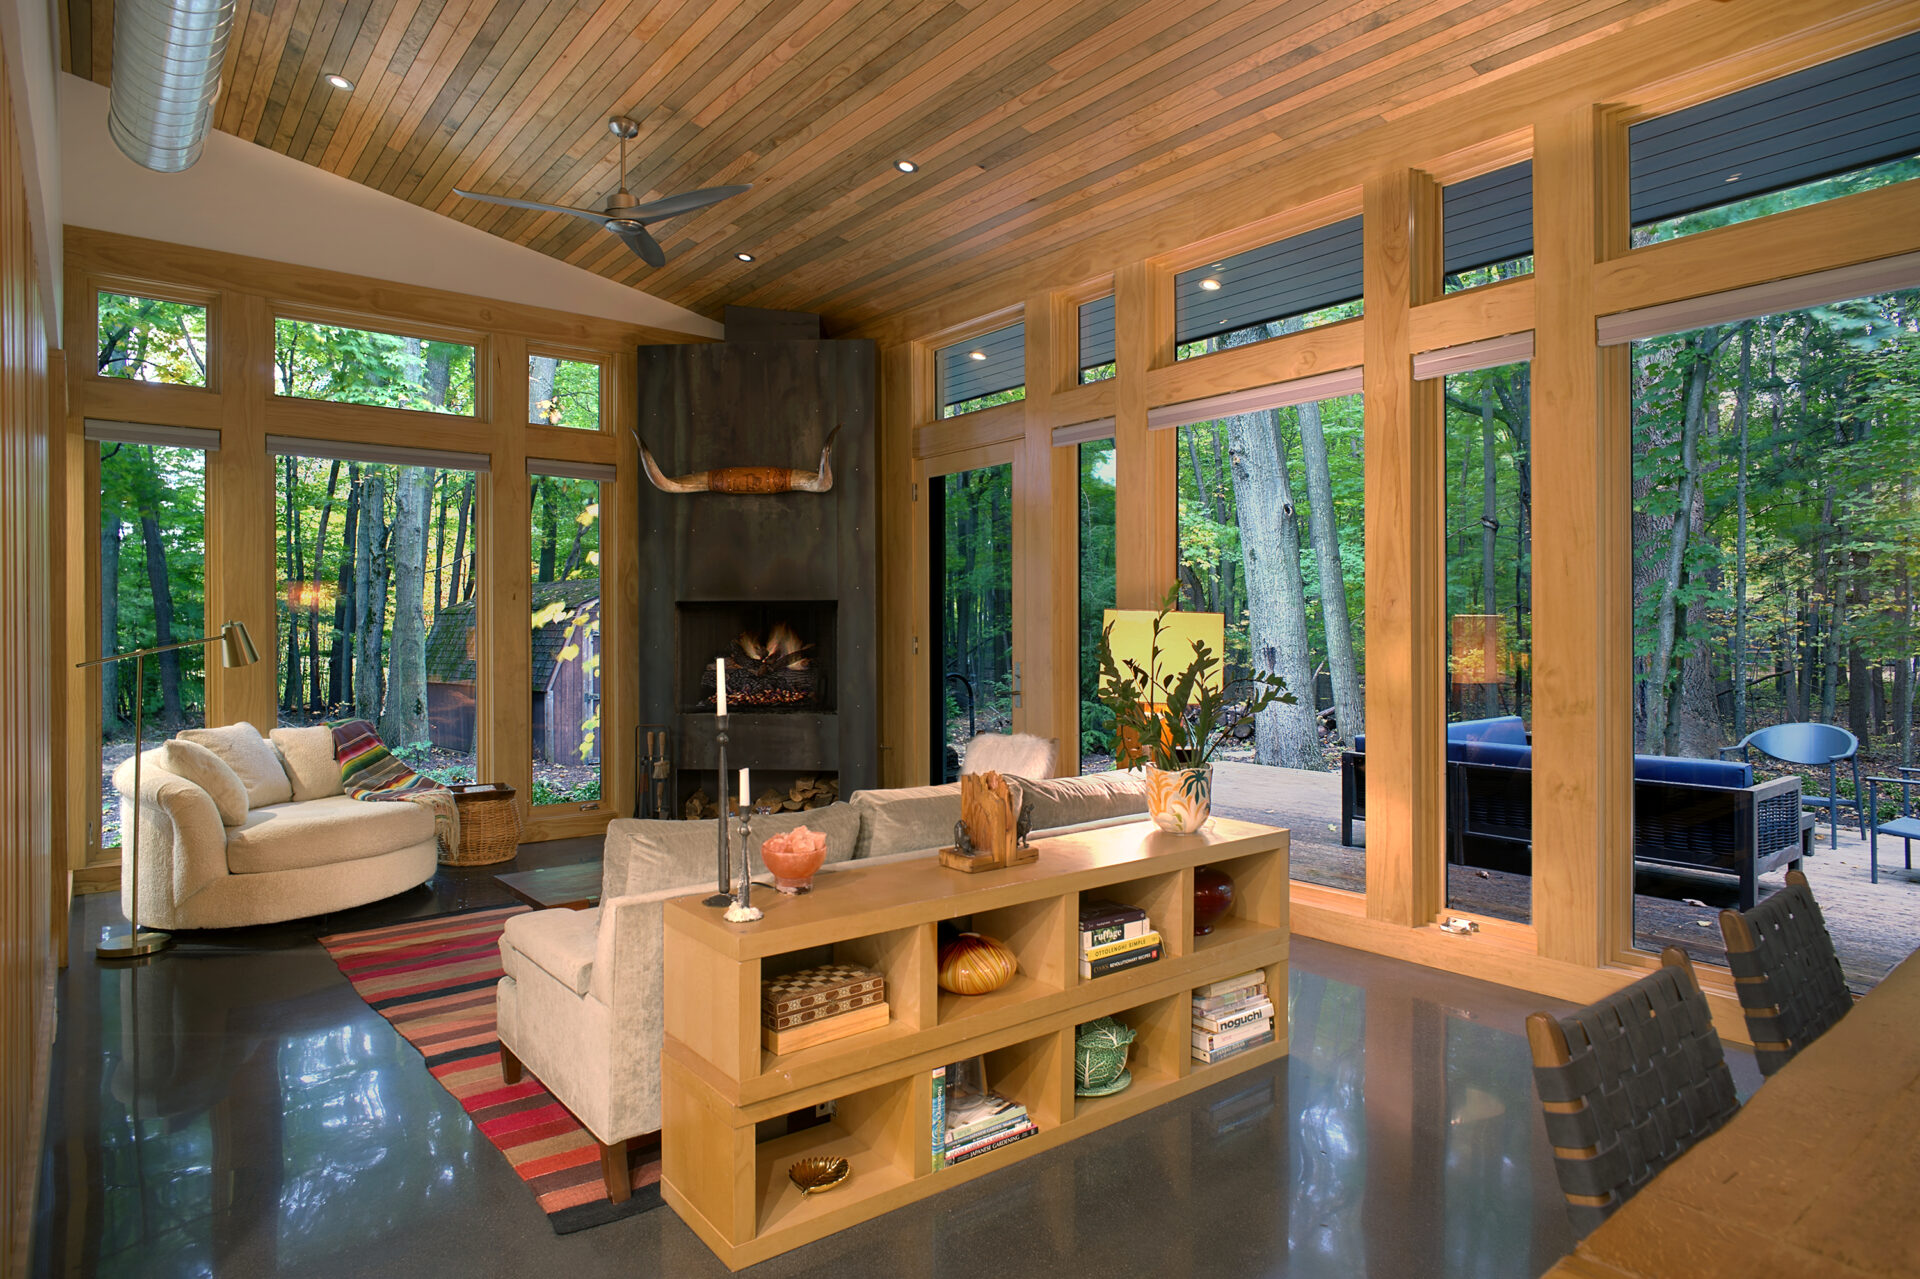 Interior open concept living area